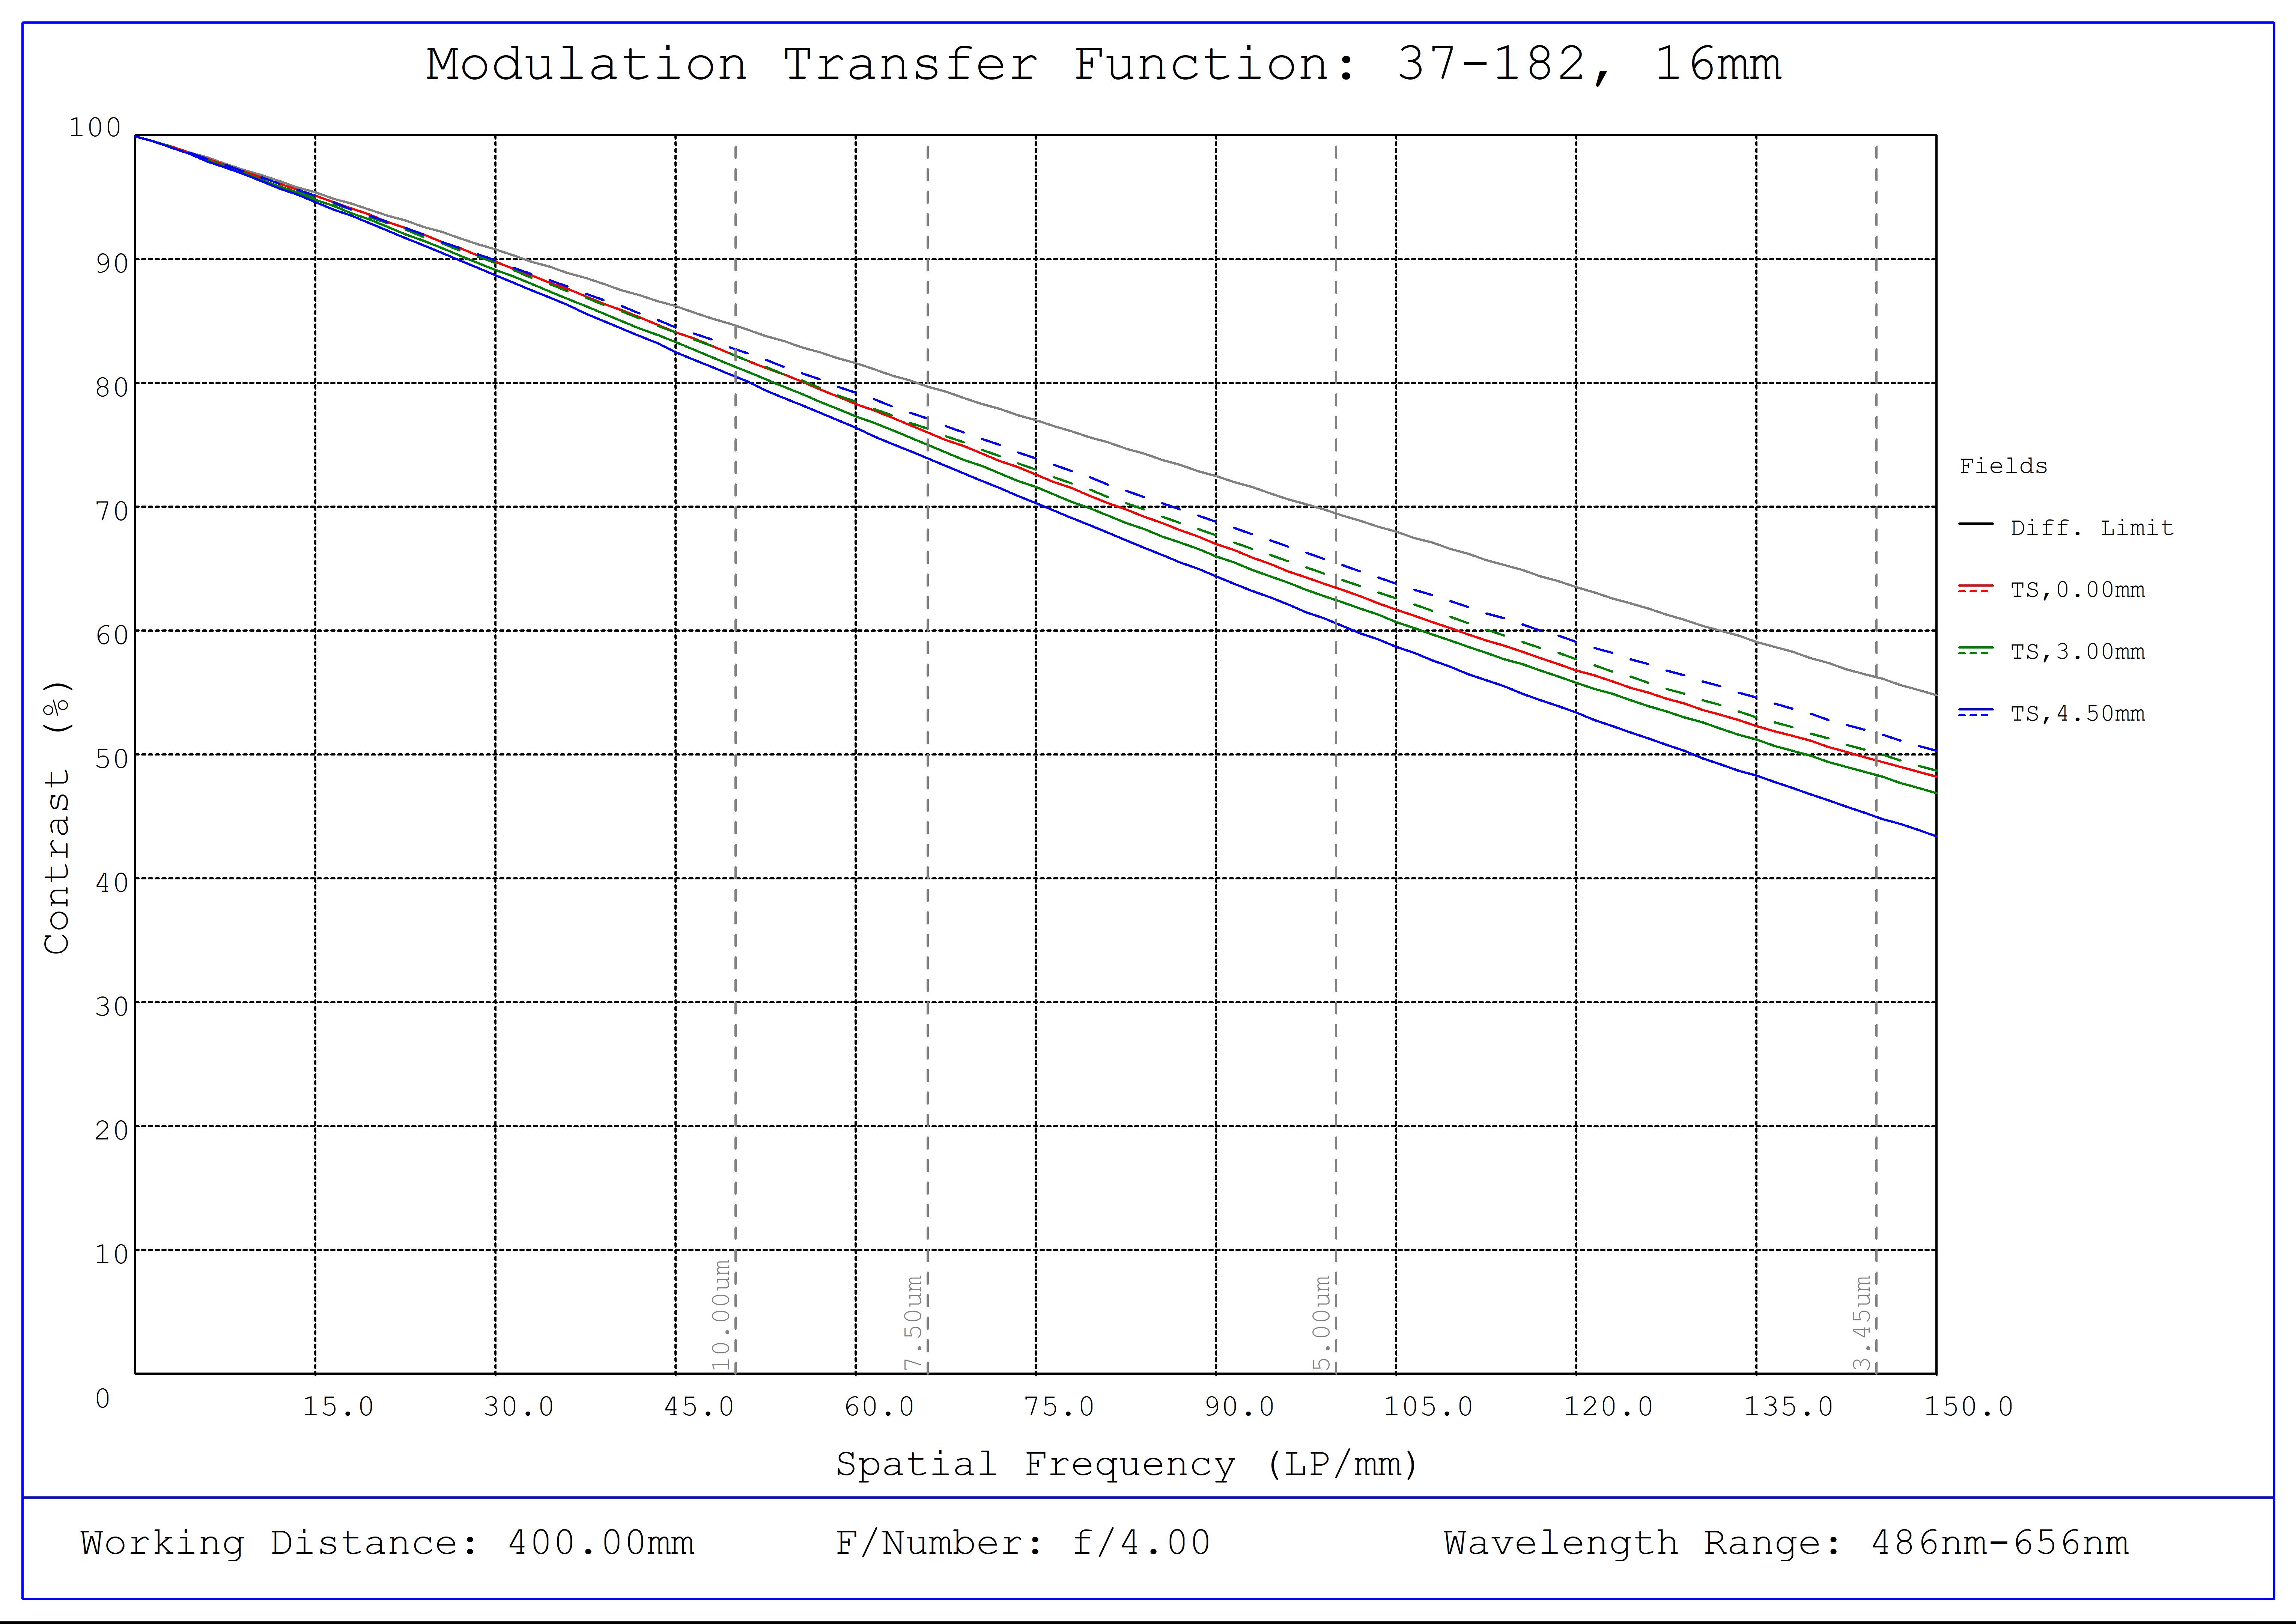 #37-182, 16mm FL f/4.0 Blue Series M12 Lens, Modulated Transfer Function (MTF) Plot, 400mm Working Distance, f4